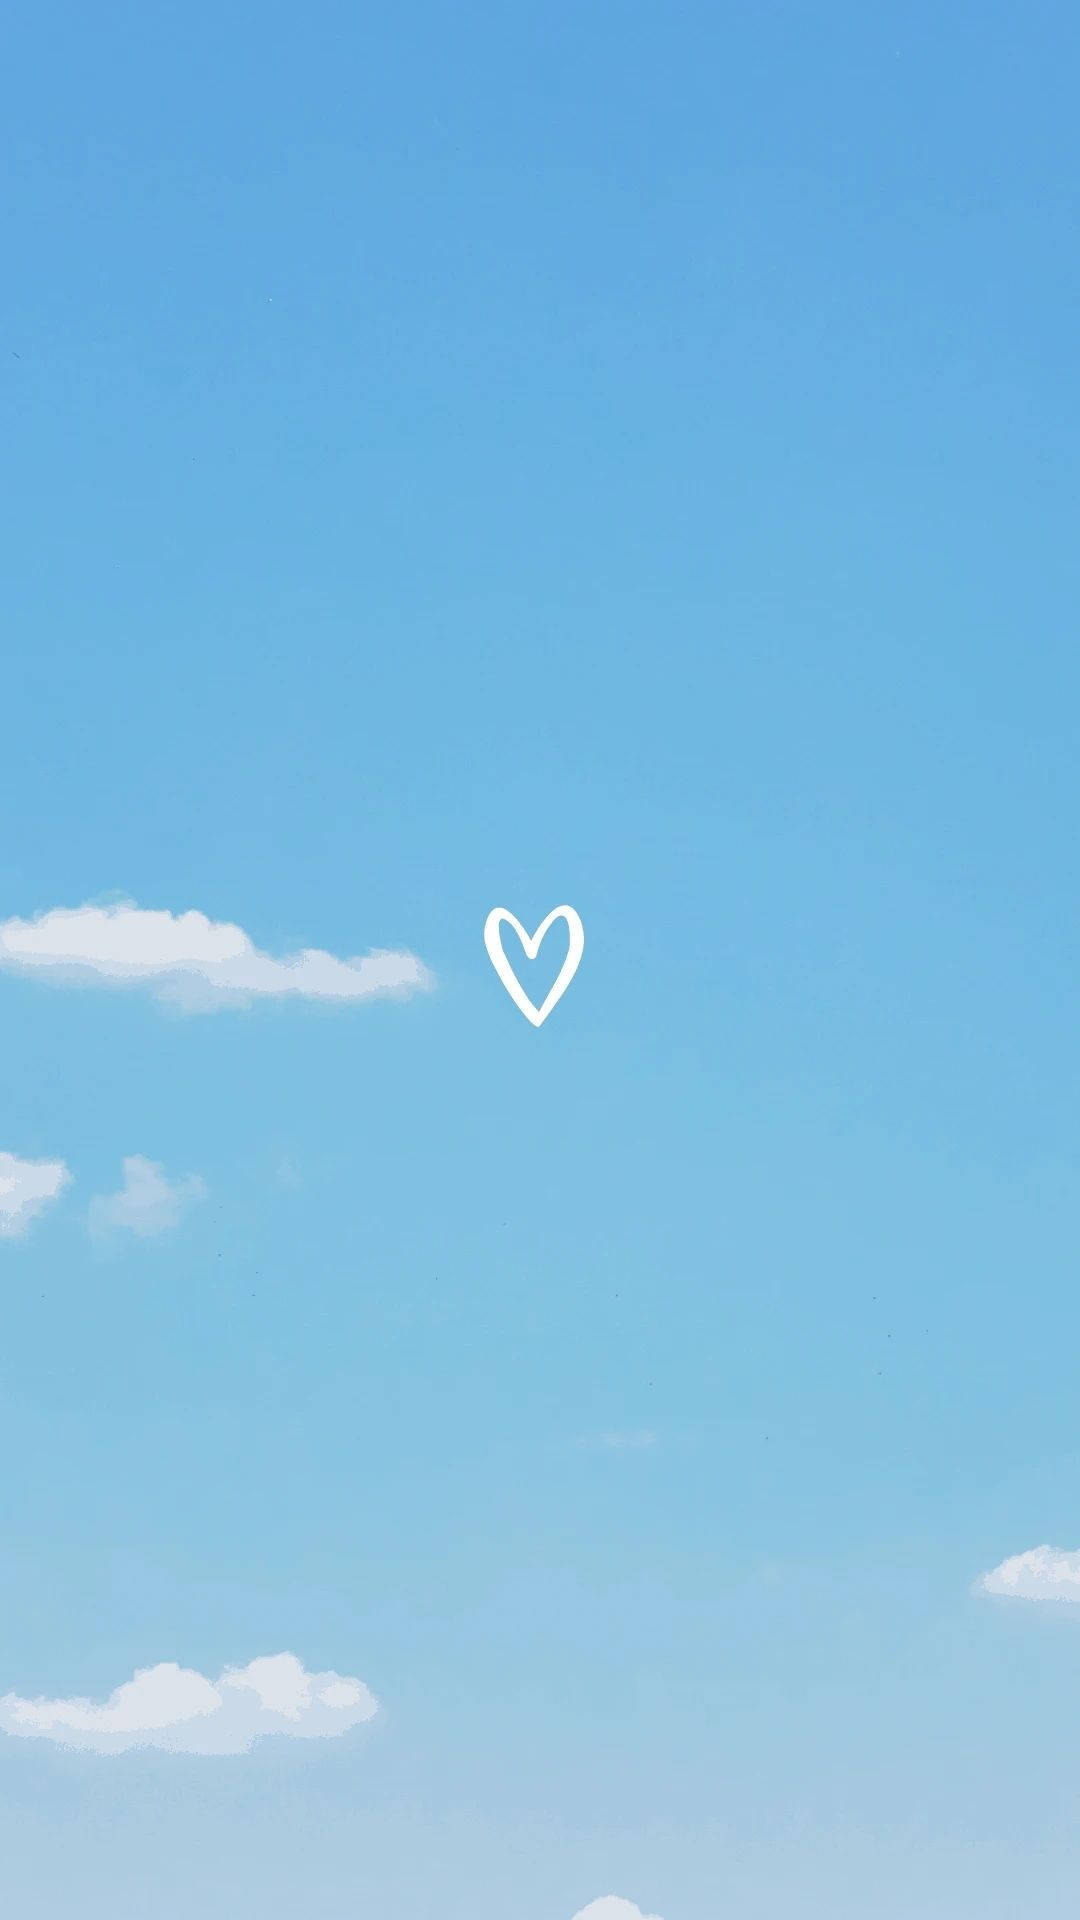 Cute Pastel Blue Aesthetic Heart Line Art Background